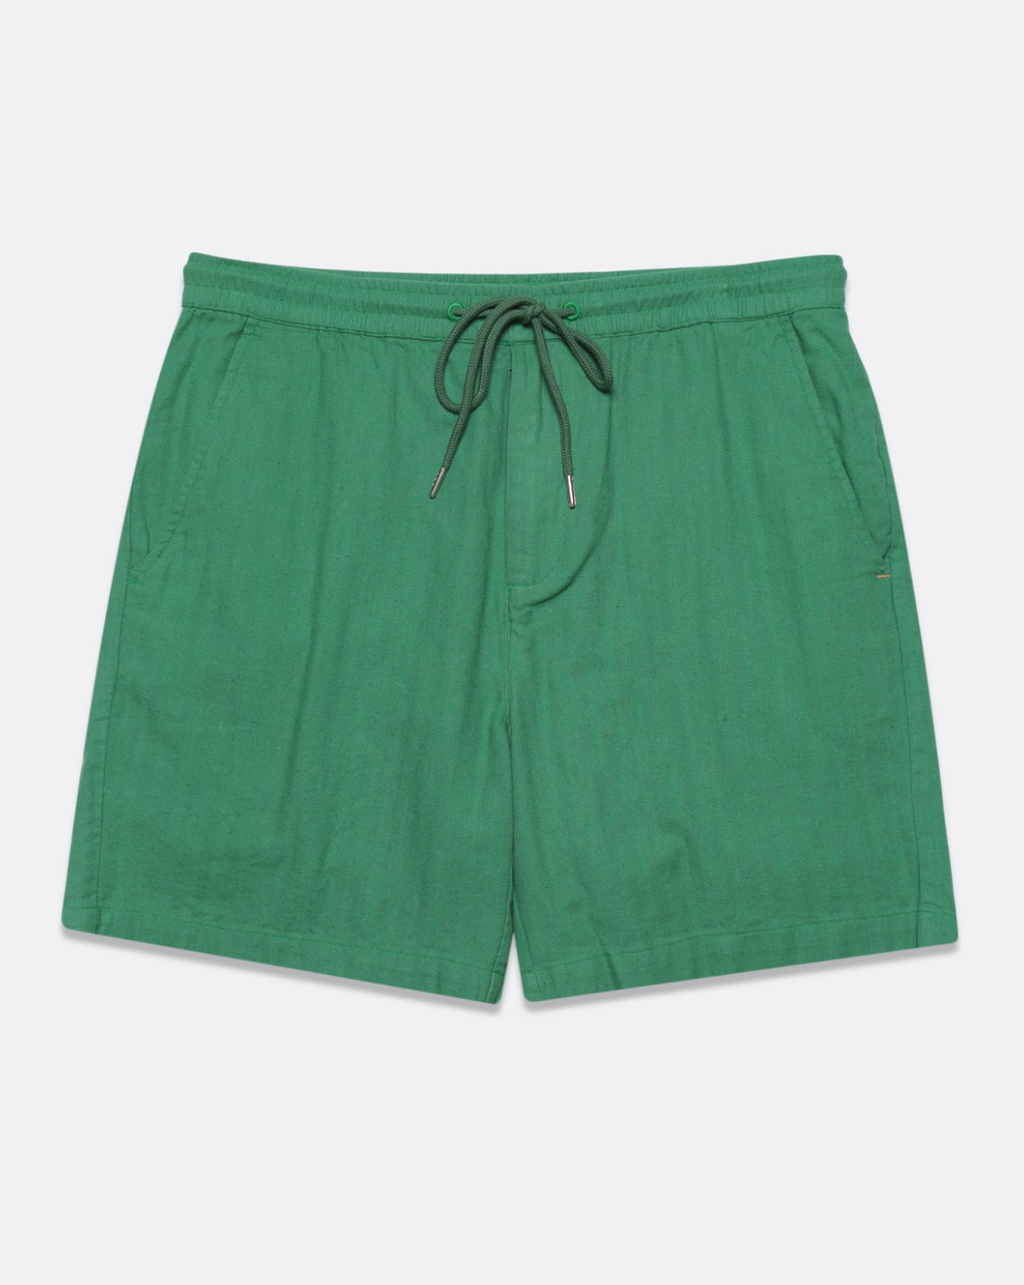 FAR AFIELD House Shorts - Green Herringbone Twill